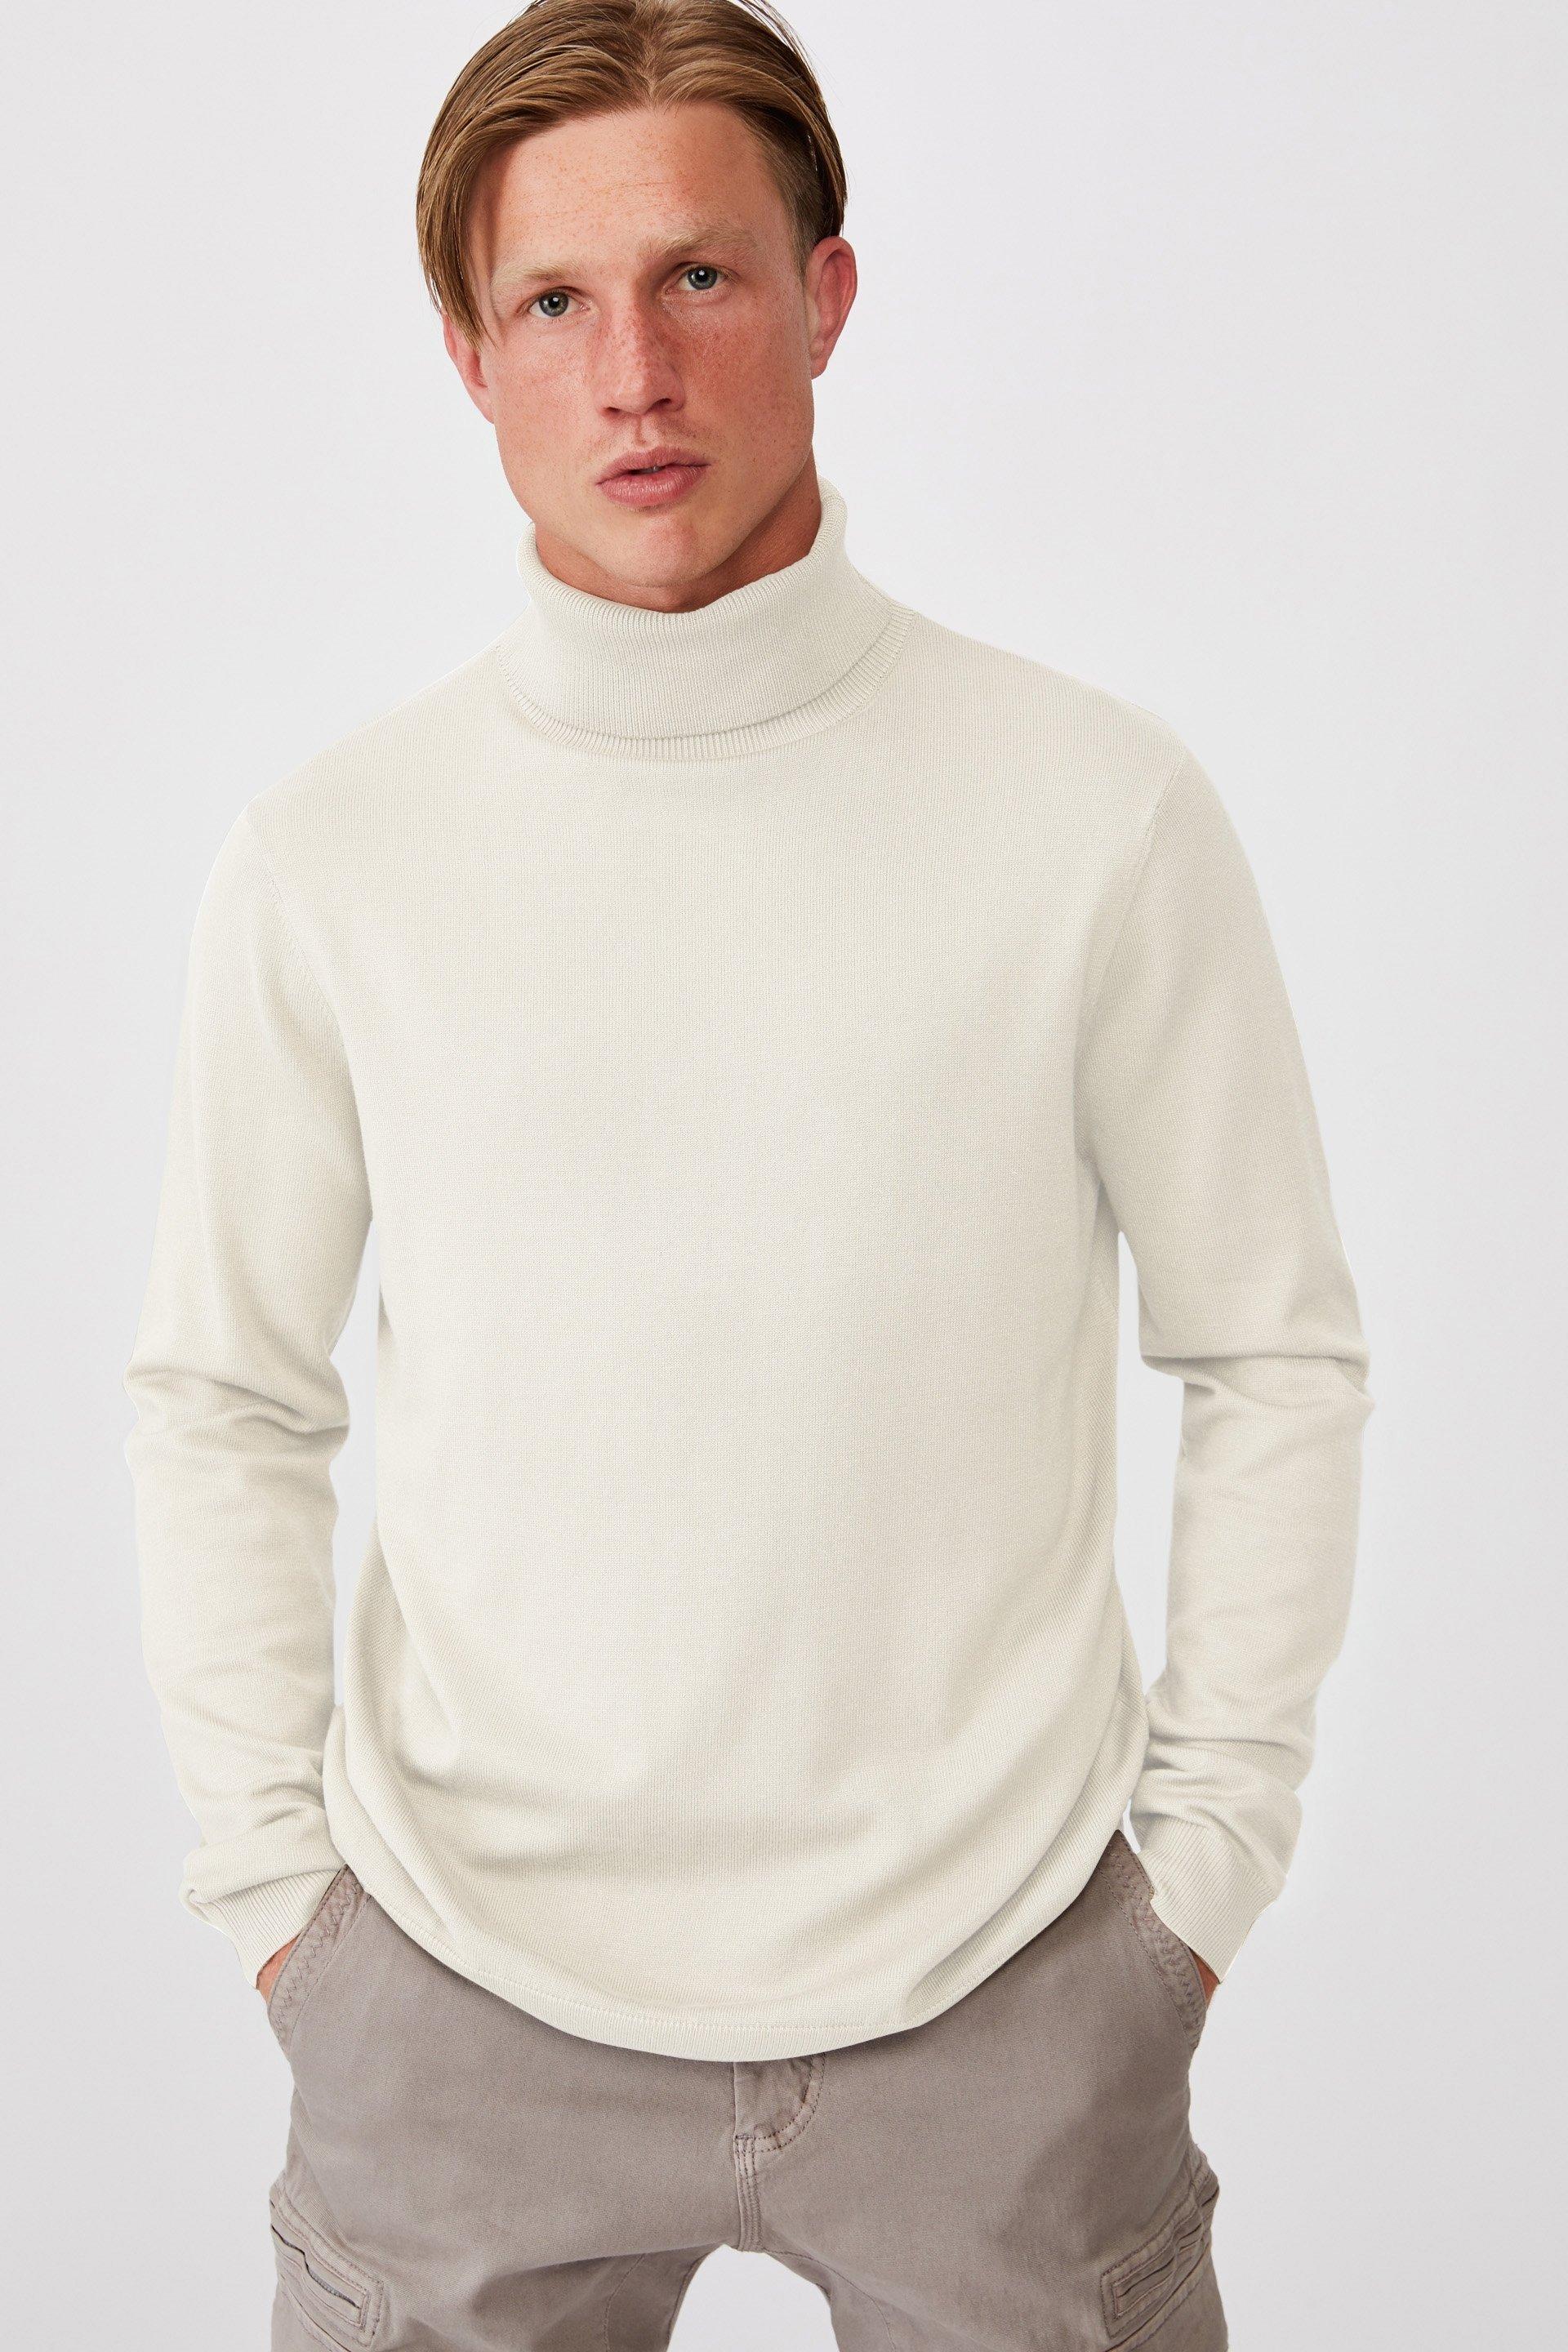 Roll neck sweater - winter white Cotton On Hoodies & Sweats ...